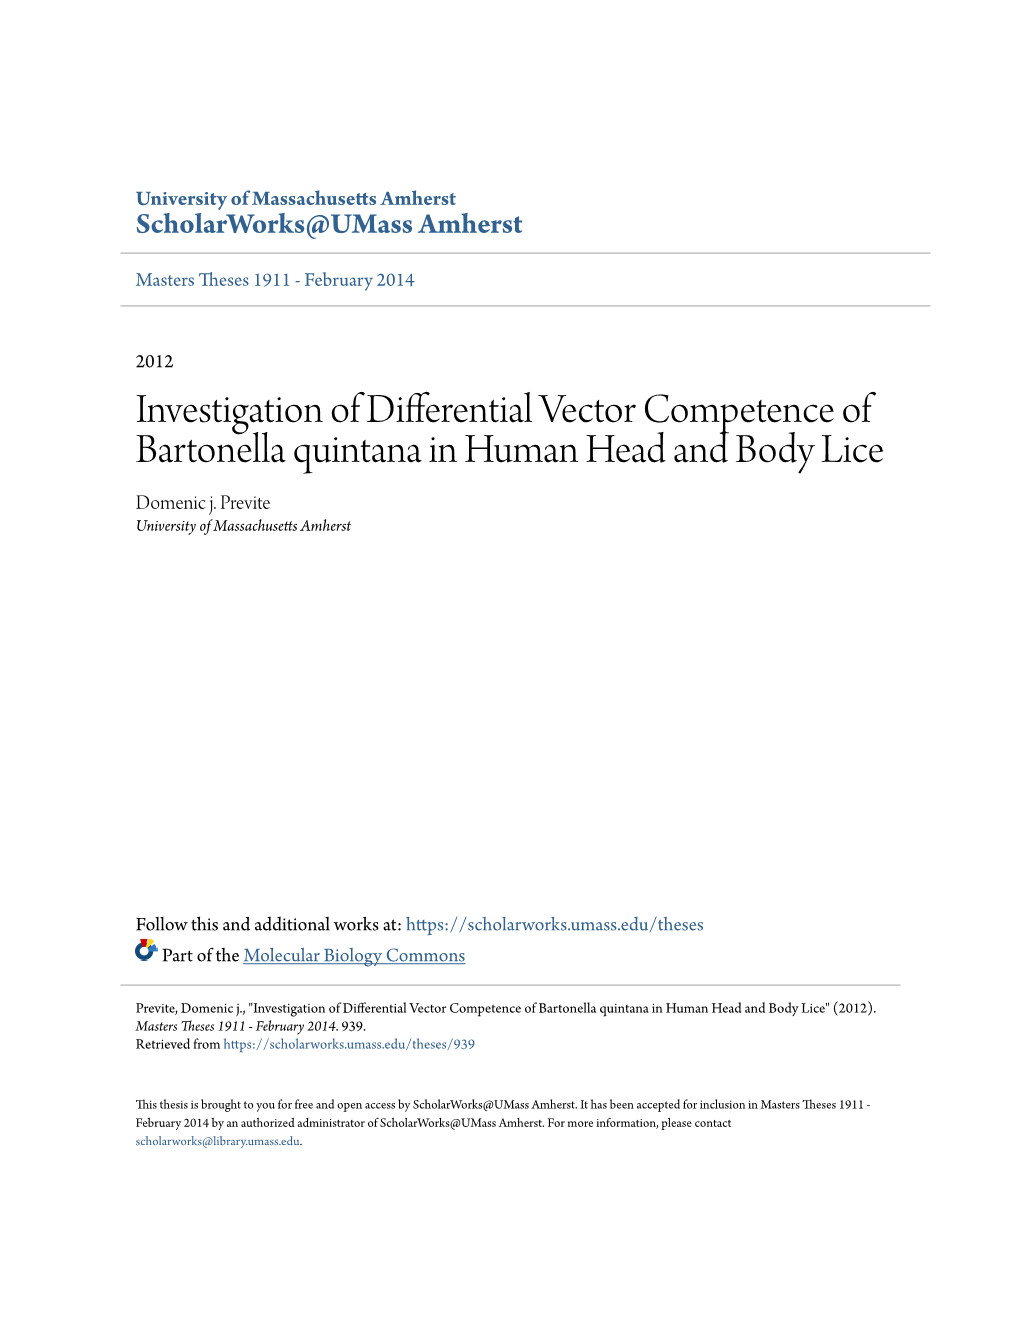 Investigation of Differential Vector Competence of Bartonella Quintana in Human Head and Body Lice Domenic J